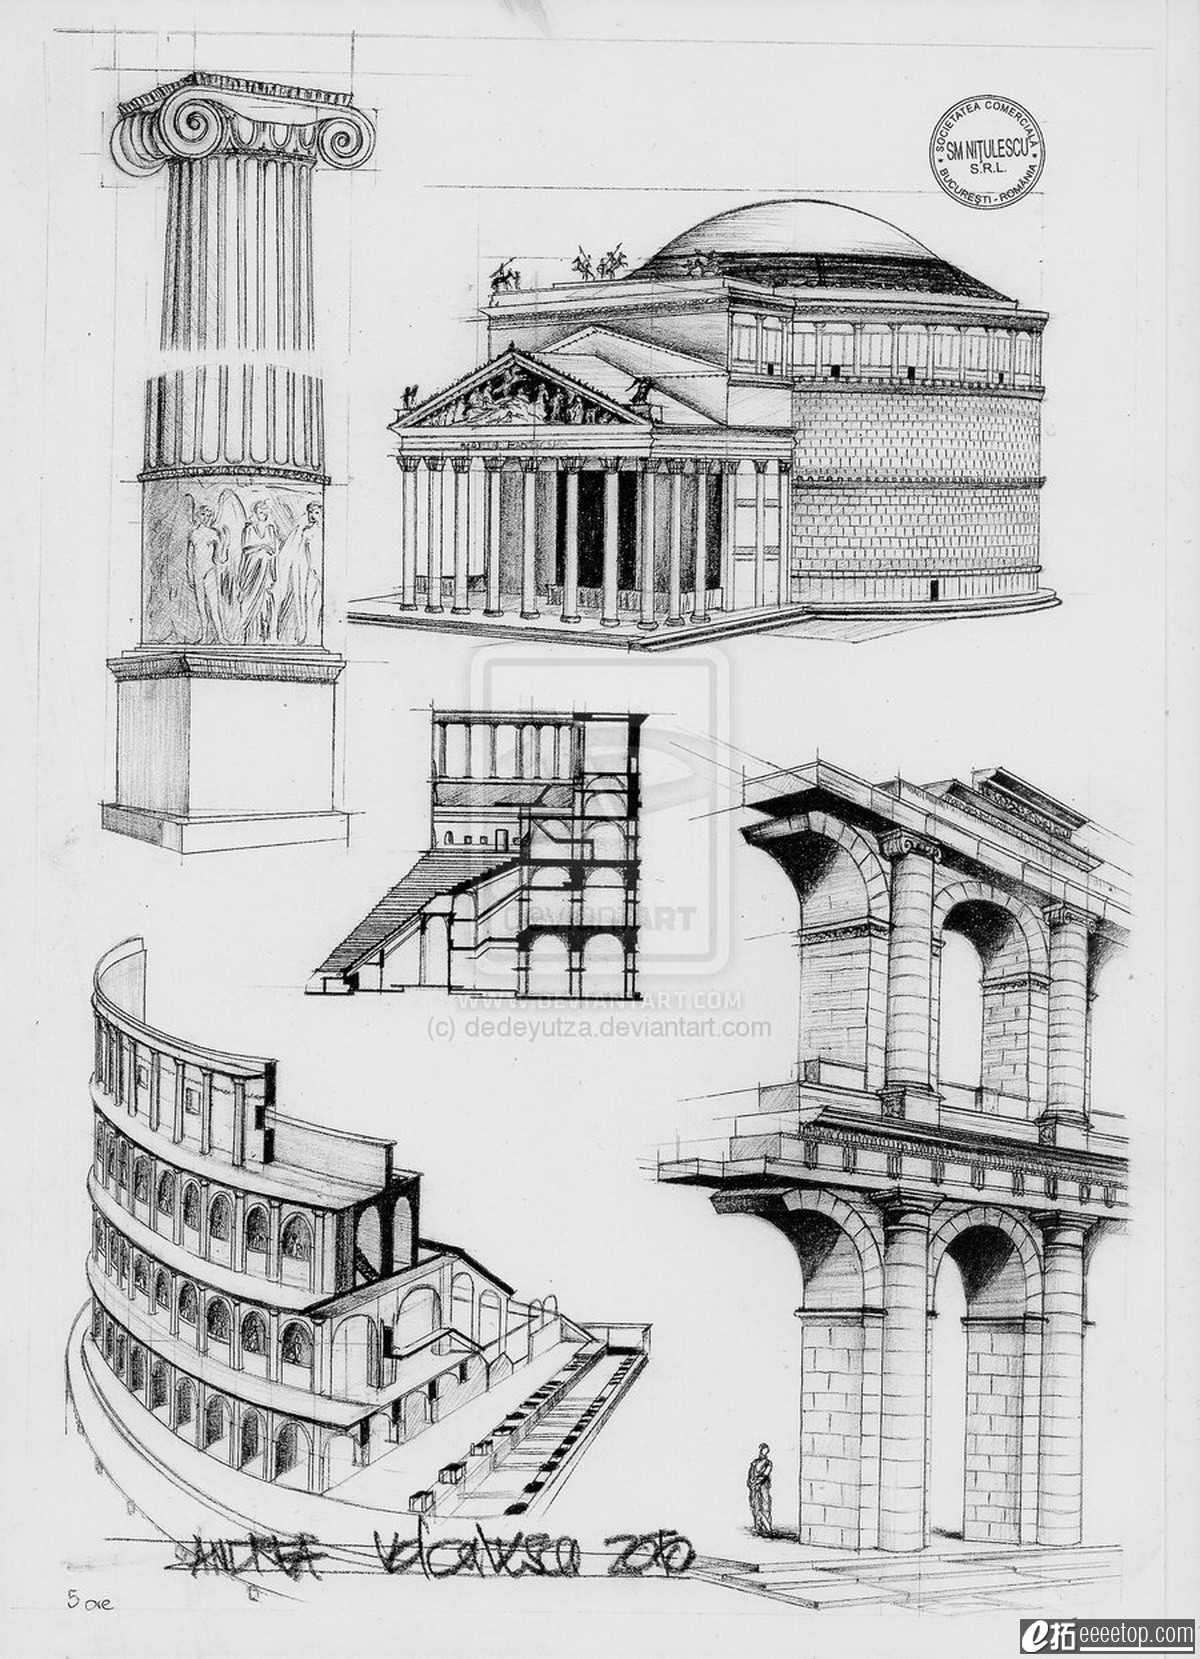 Roman_Architecture_by_dedeyutza_调整大小.jpg